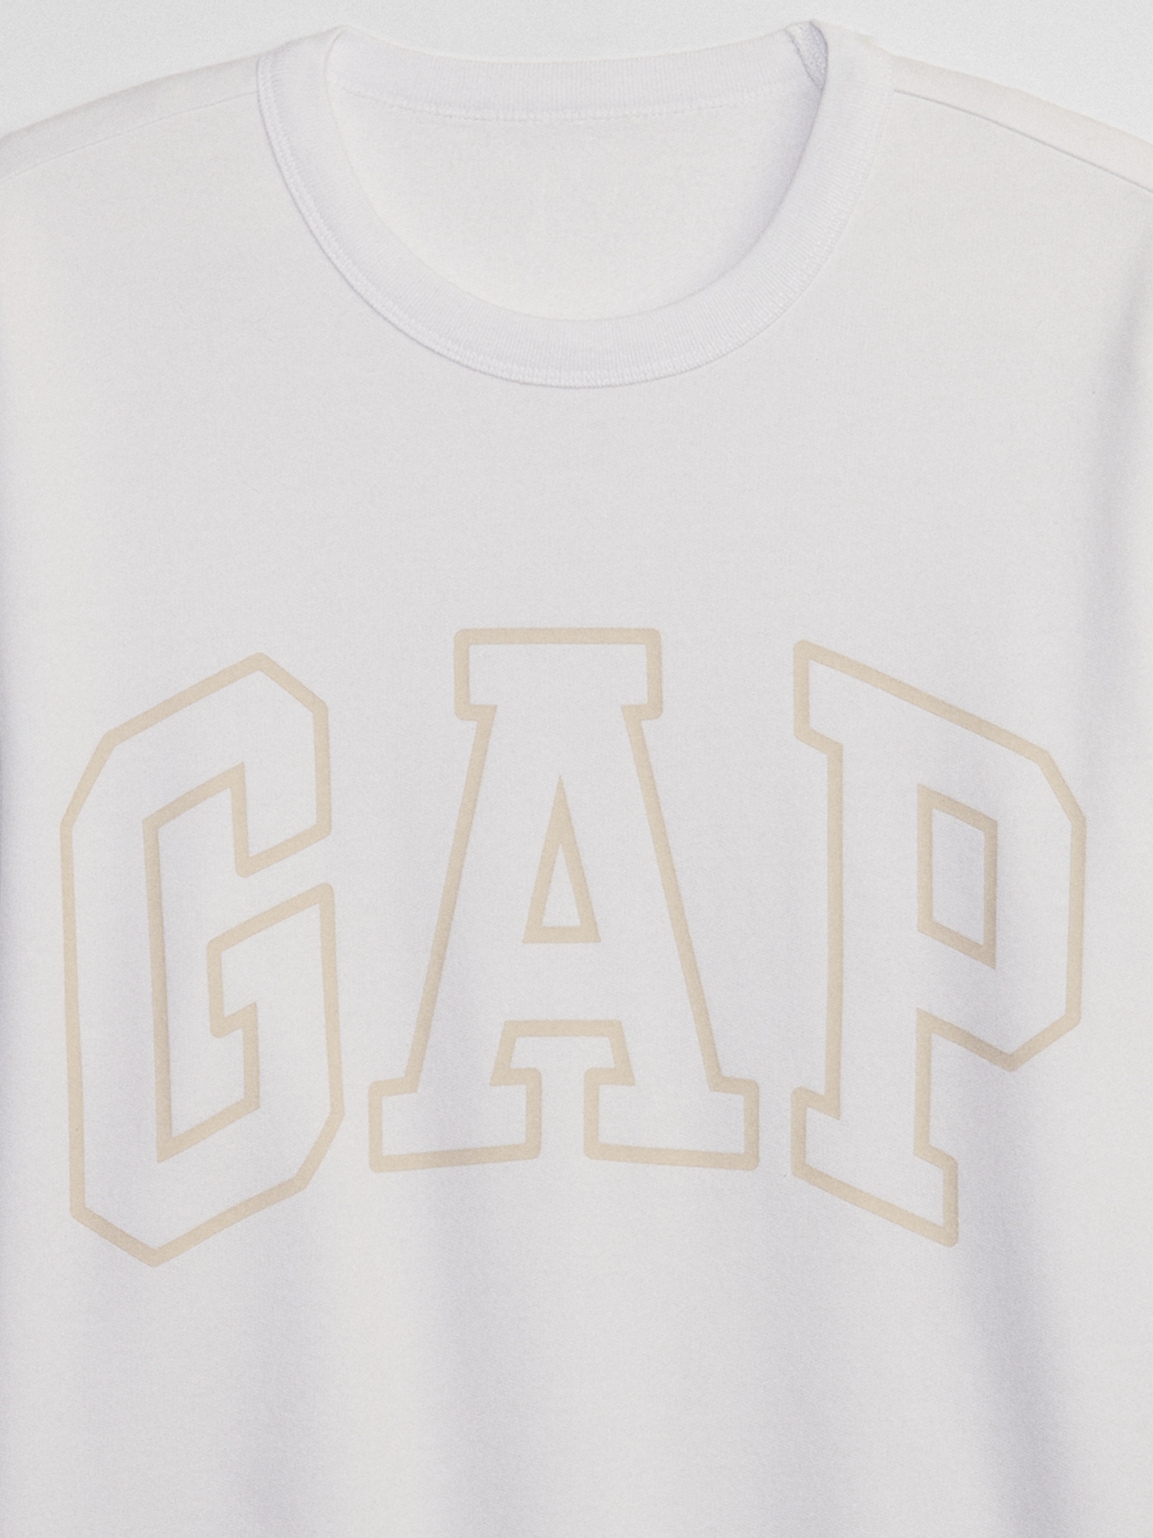 Gap Logo Sweatshirt | Gap Factory